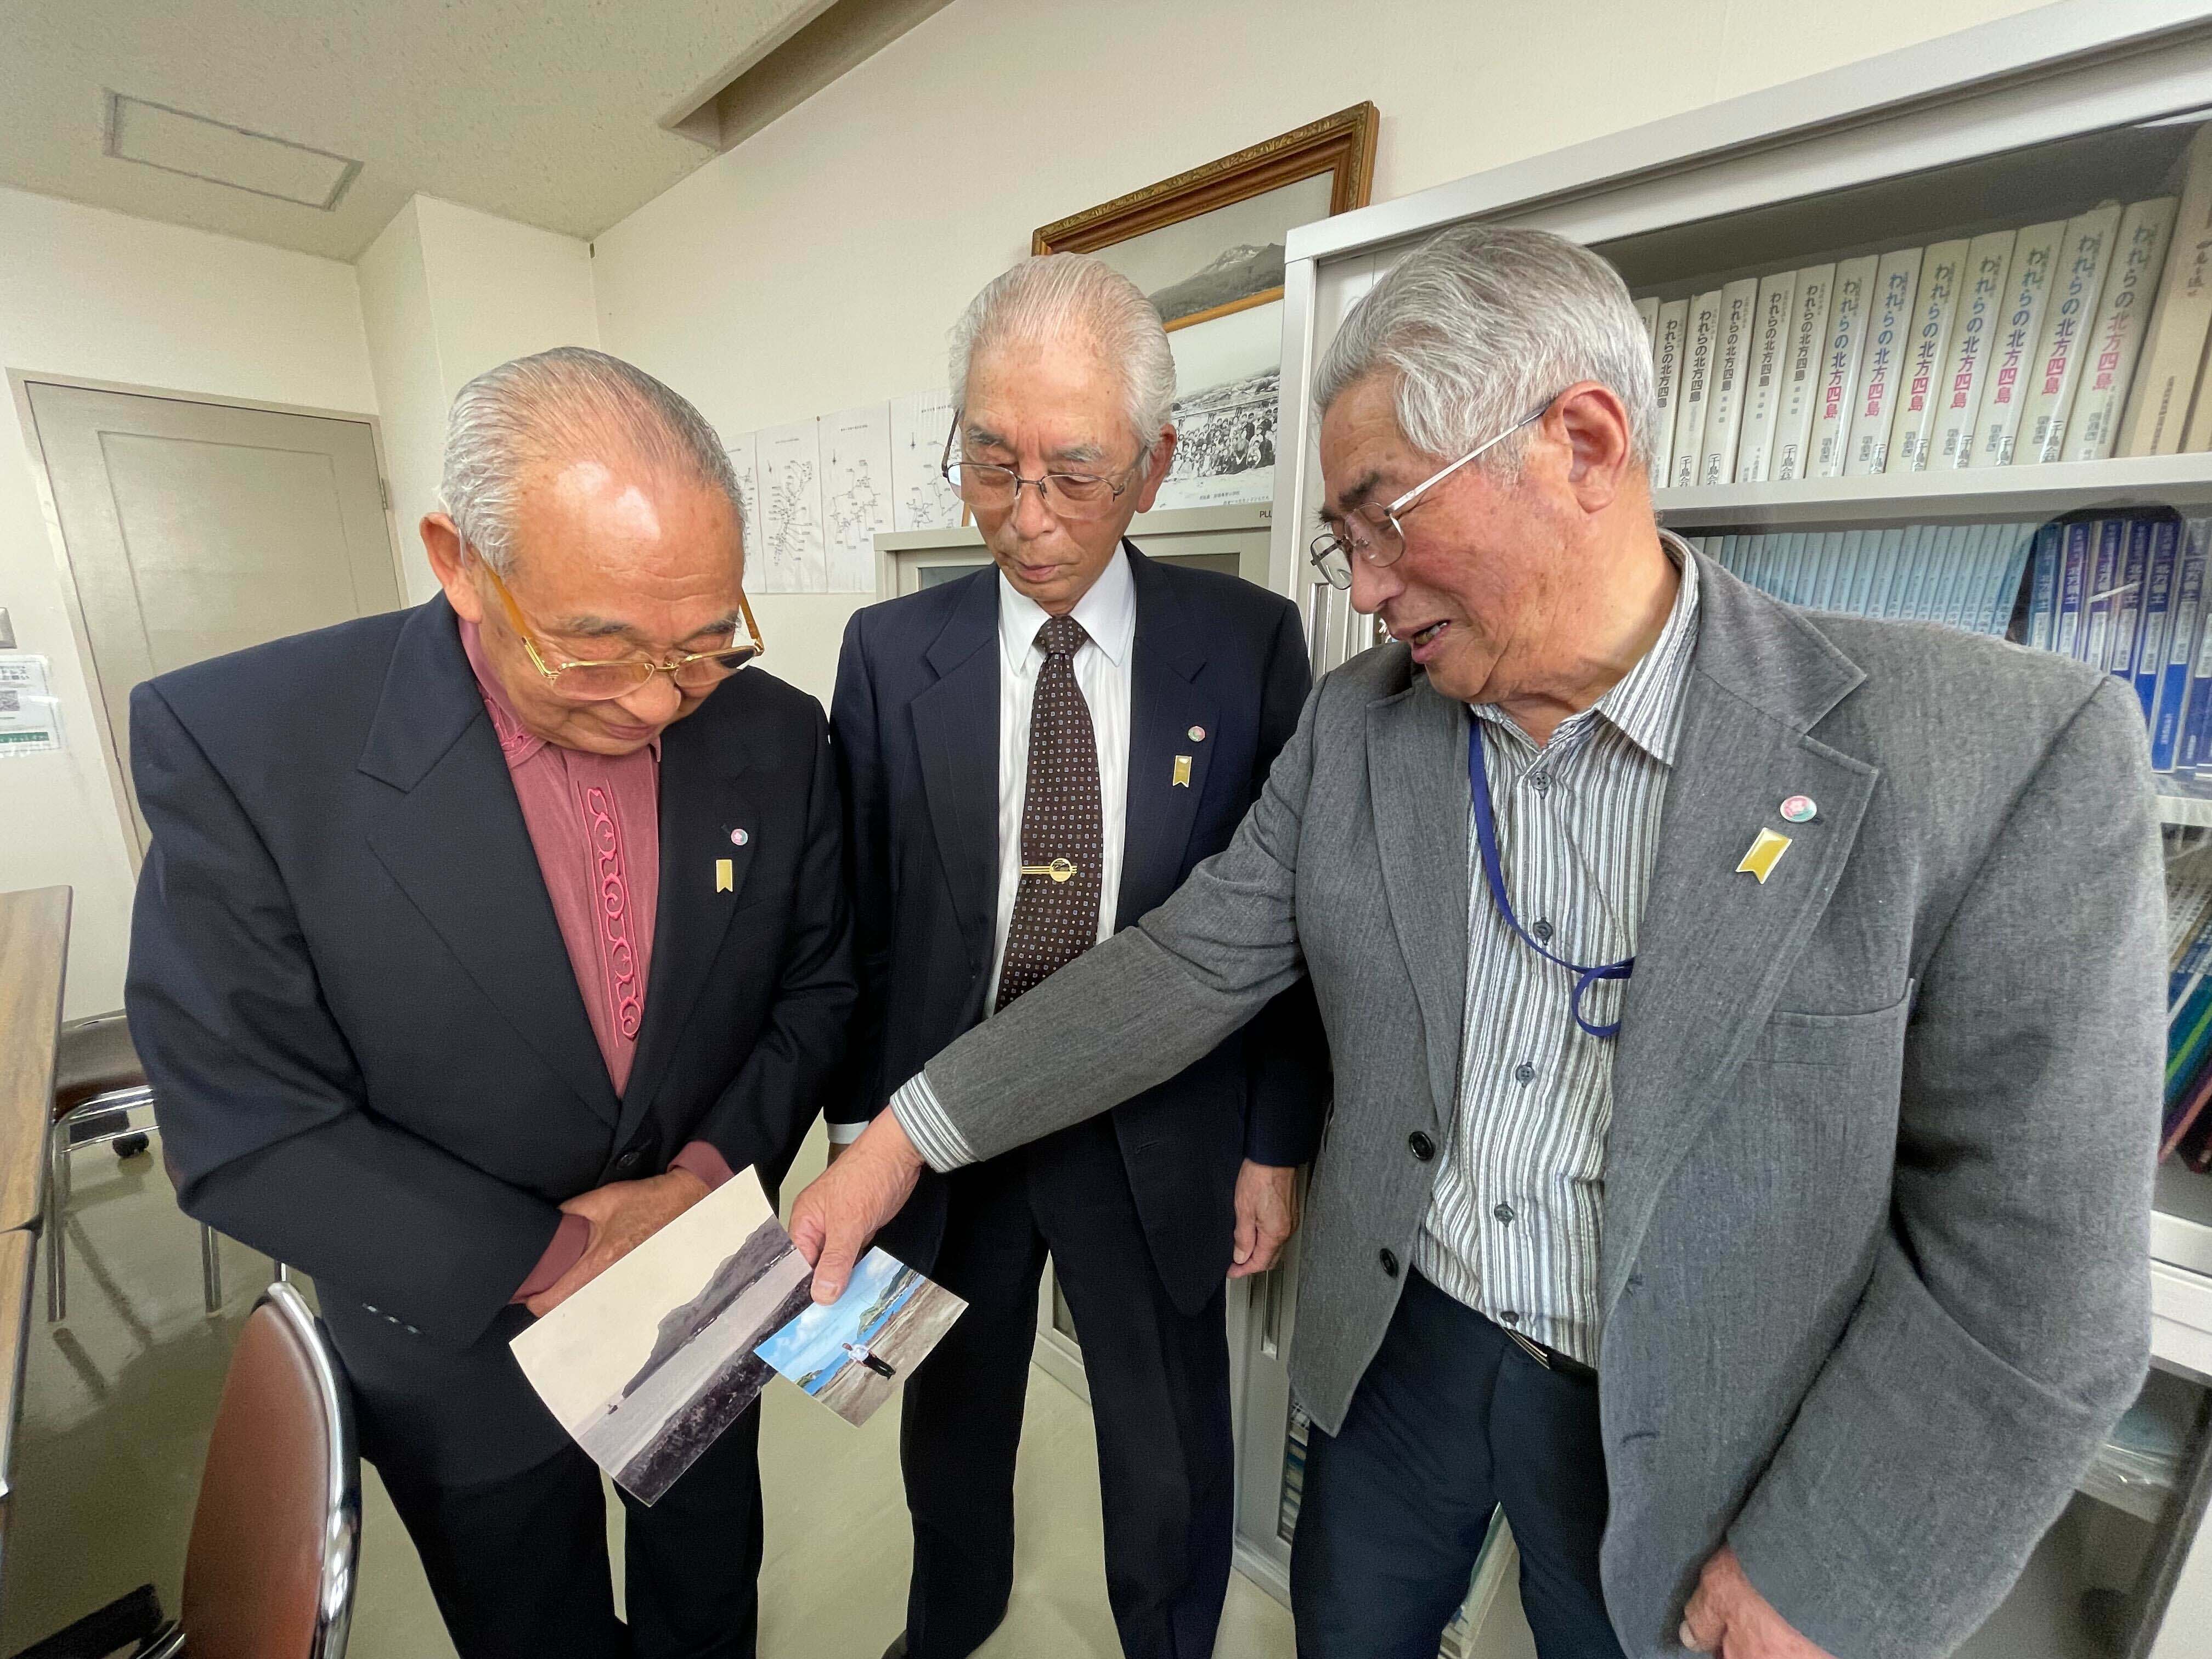 Yasuji Tsunoka, Hirotoshi Kawata and Hiroshi Tokuno, former residents of the Northern Territories, look at photos from their home islands